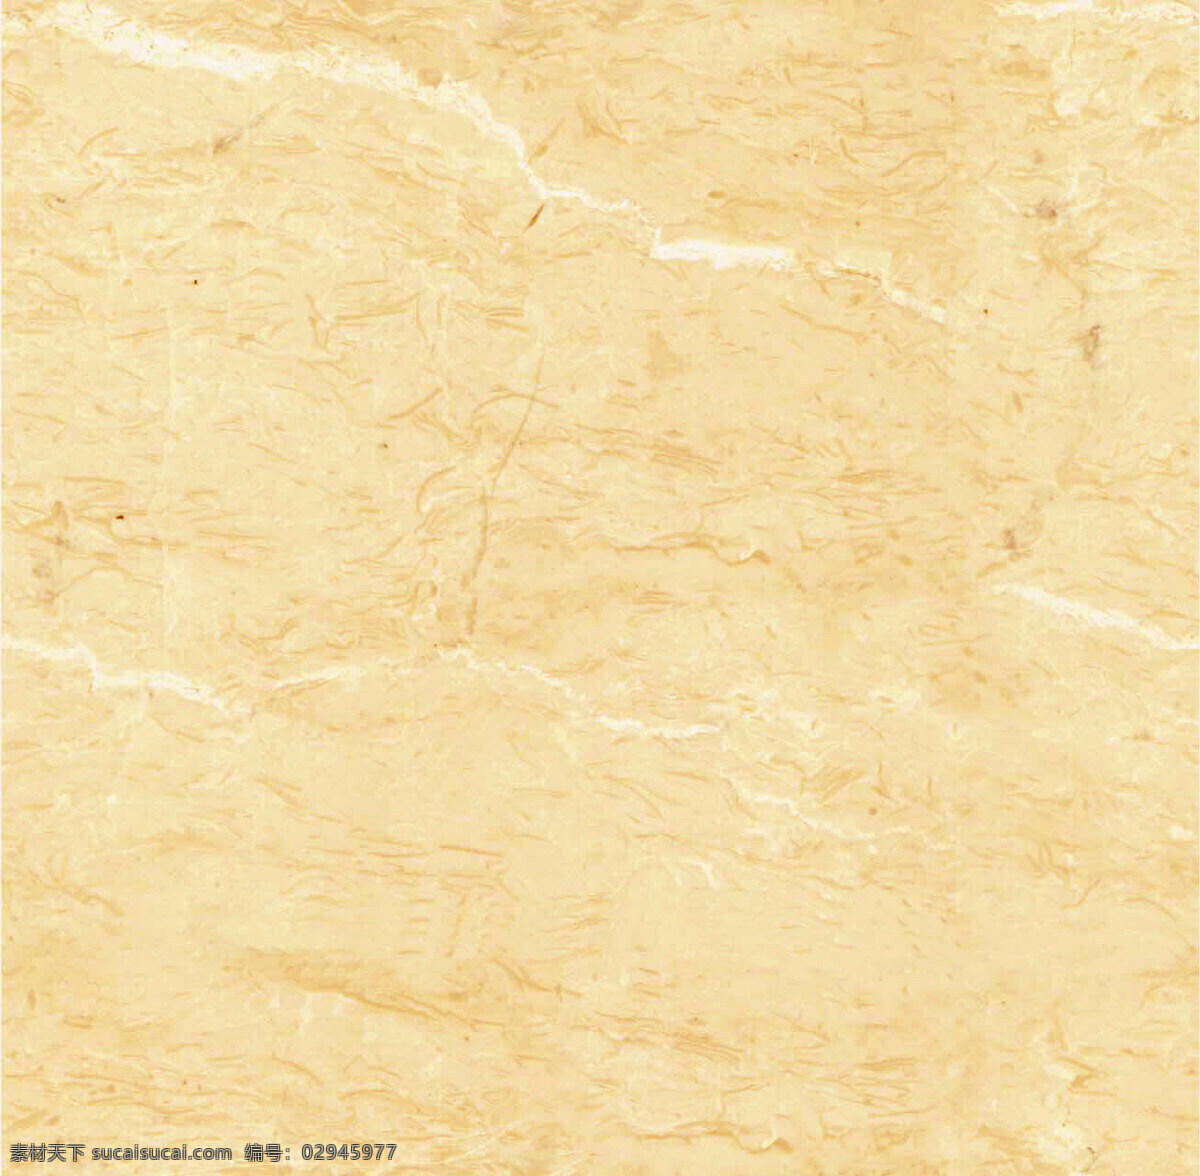 vray 米黄色 墙面 材质 有贴图 max2008 石料 3d模型素材 材质贴图